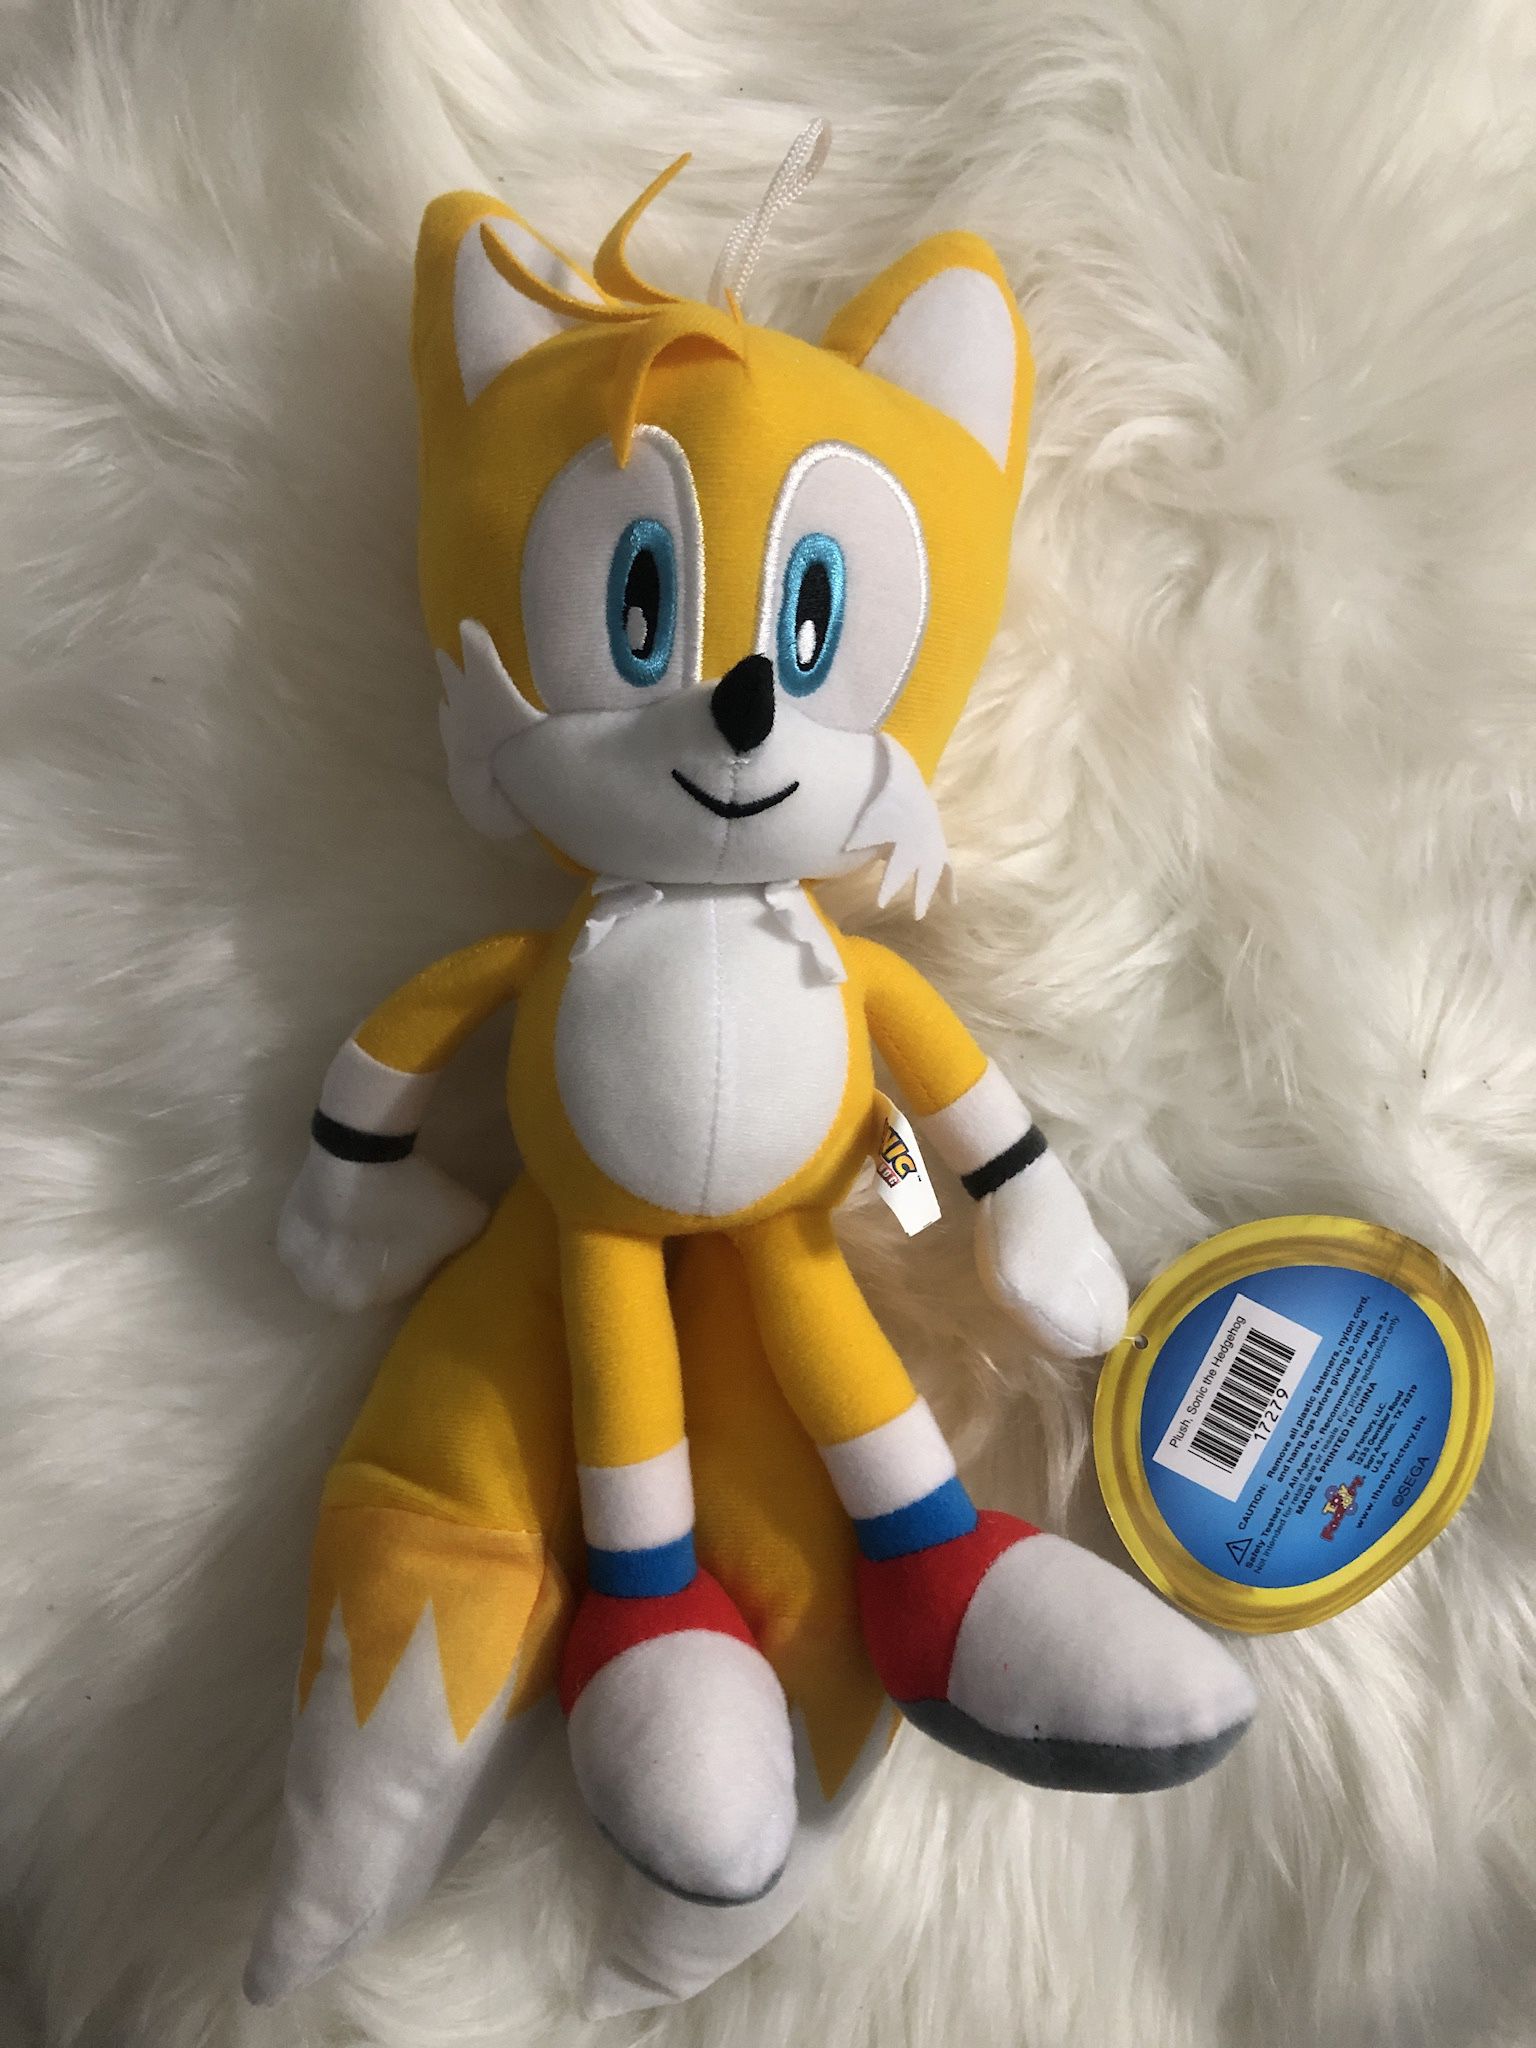 NEW Sonic The Hedgehog (Tails) Plush Stuffed Animals